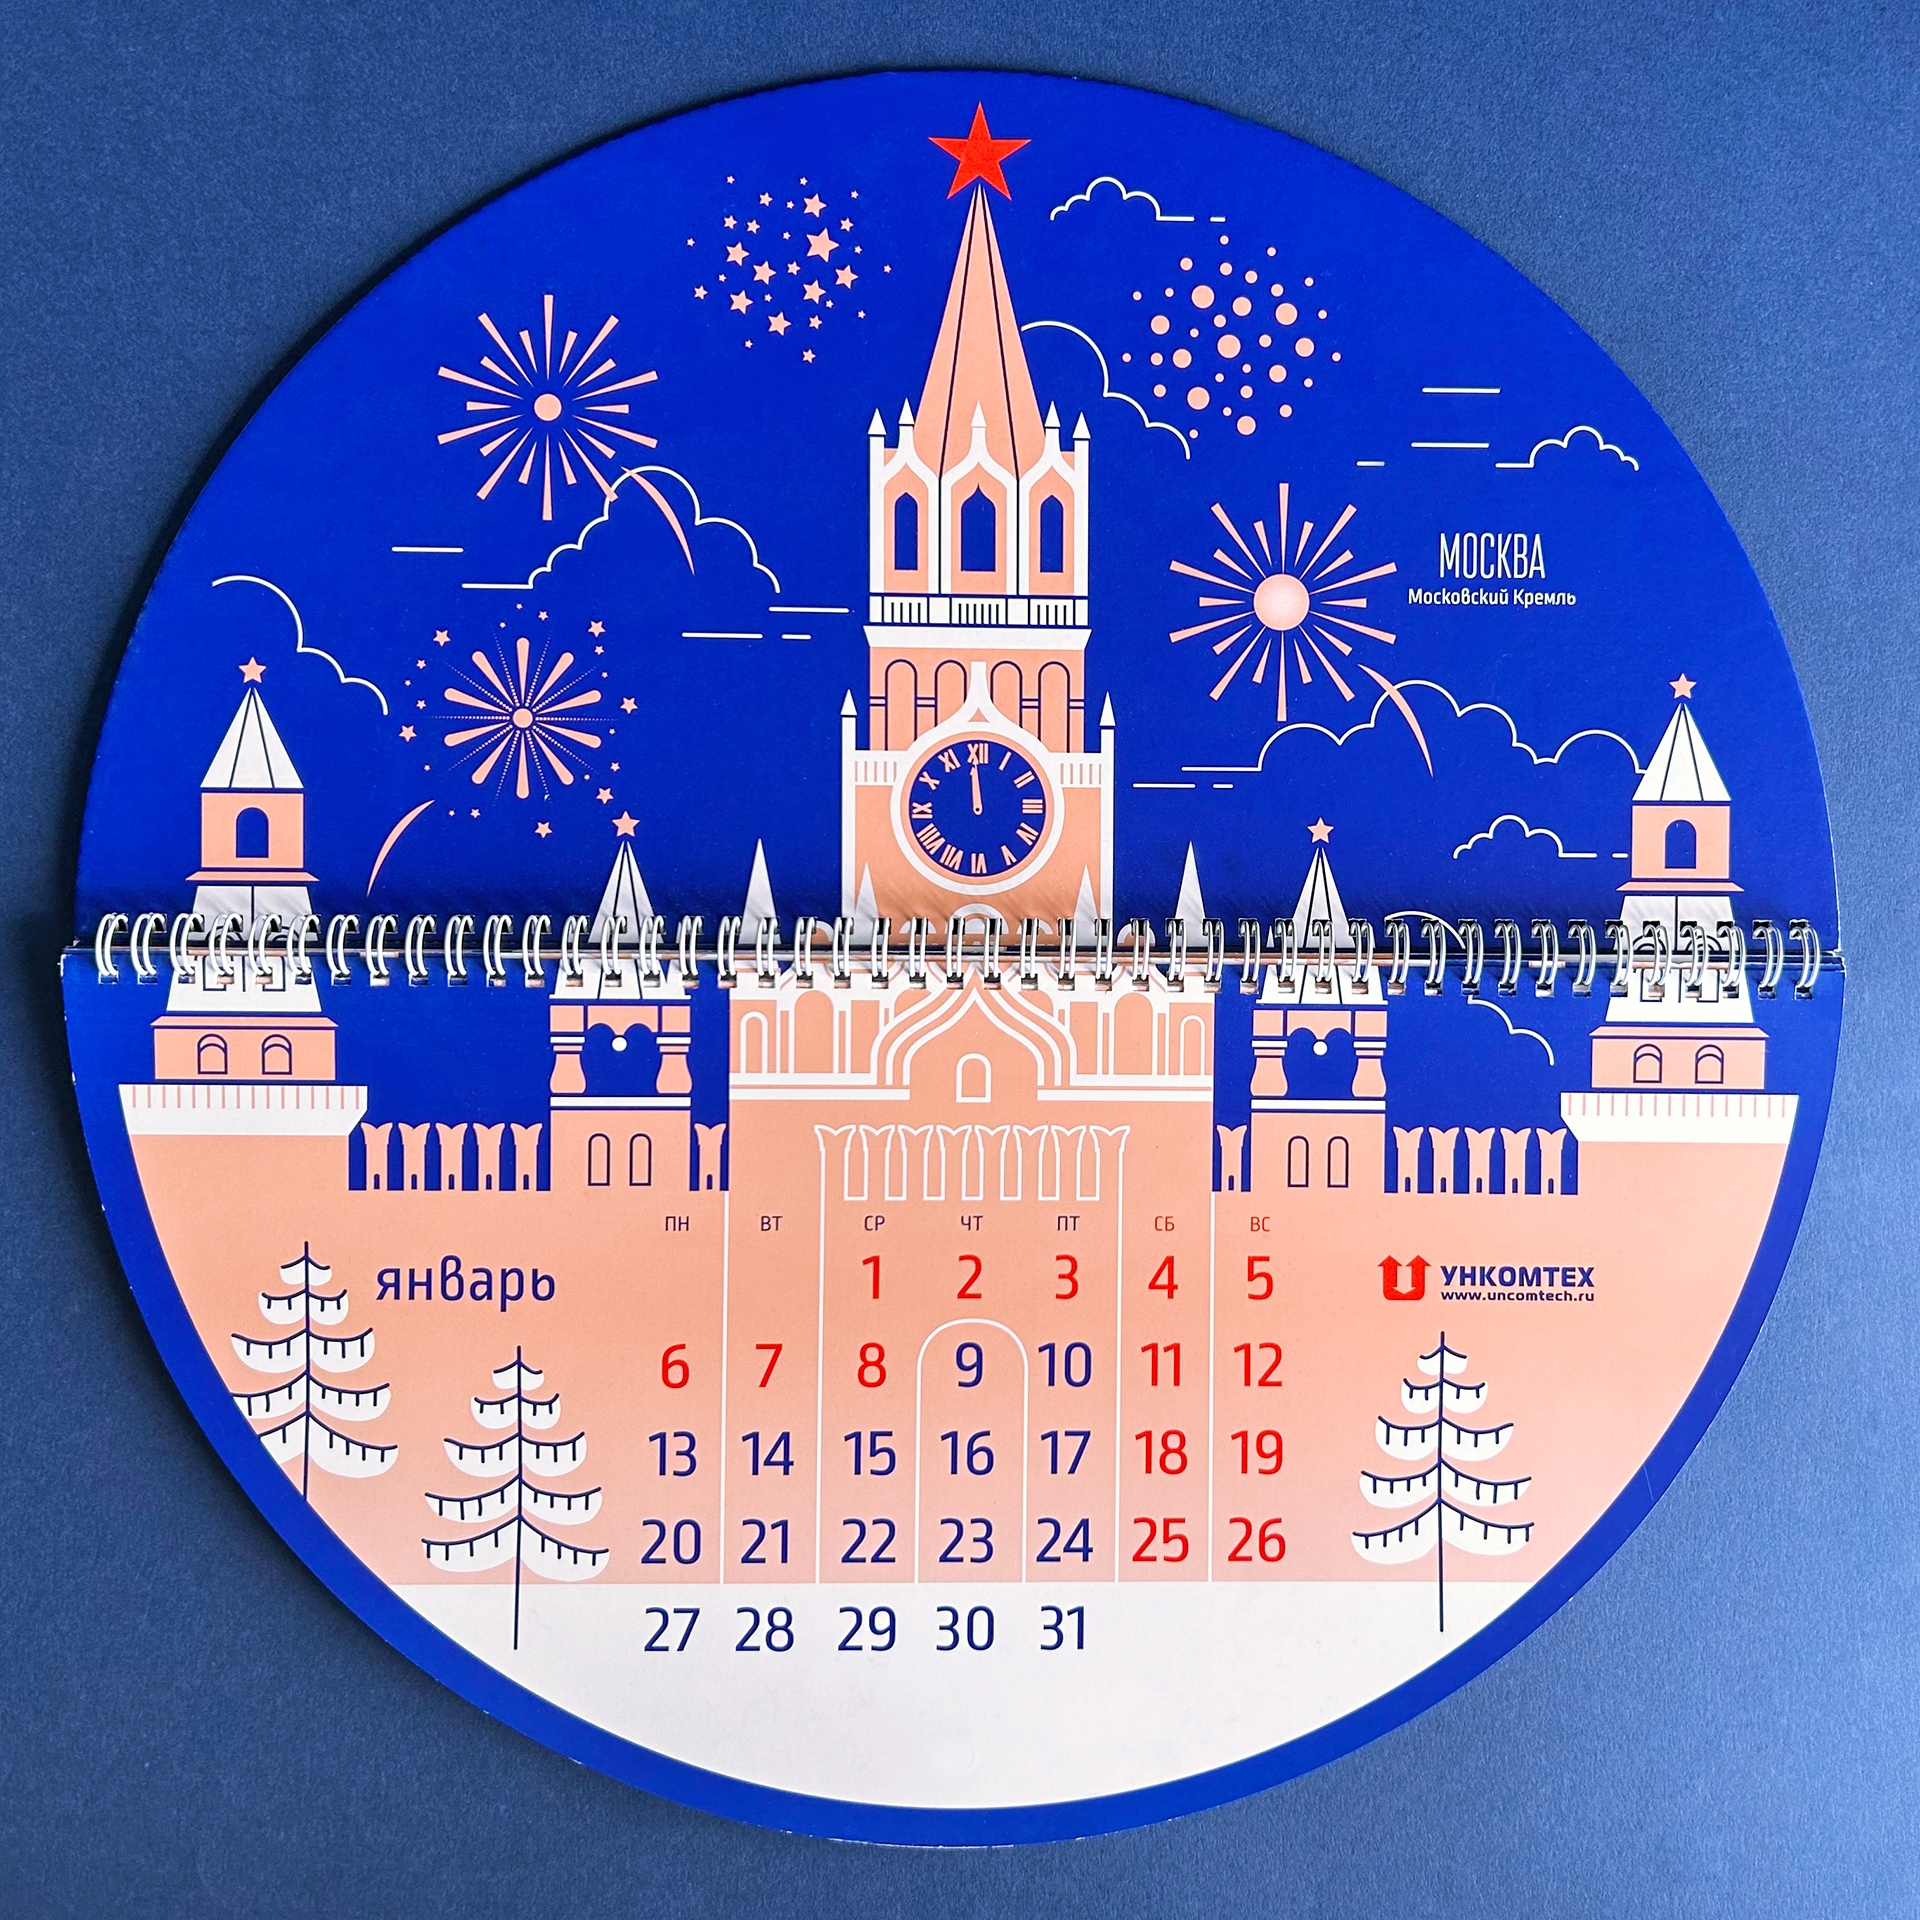 Ункомтех - Календарь на 2021 год